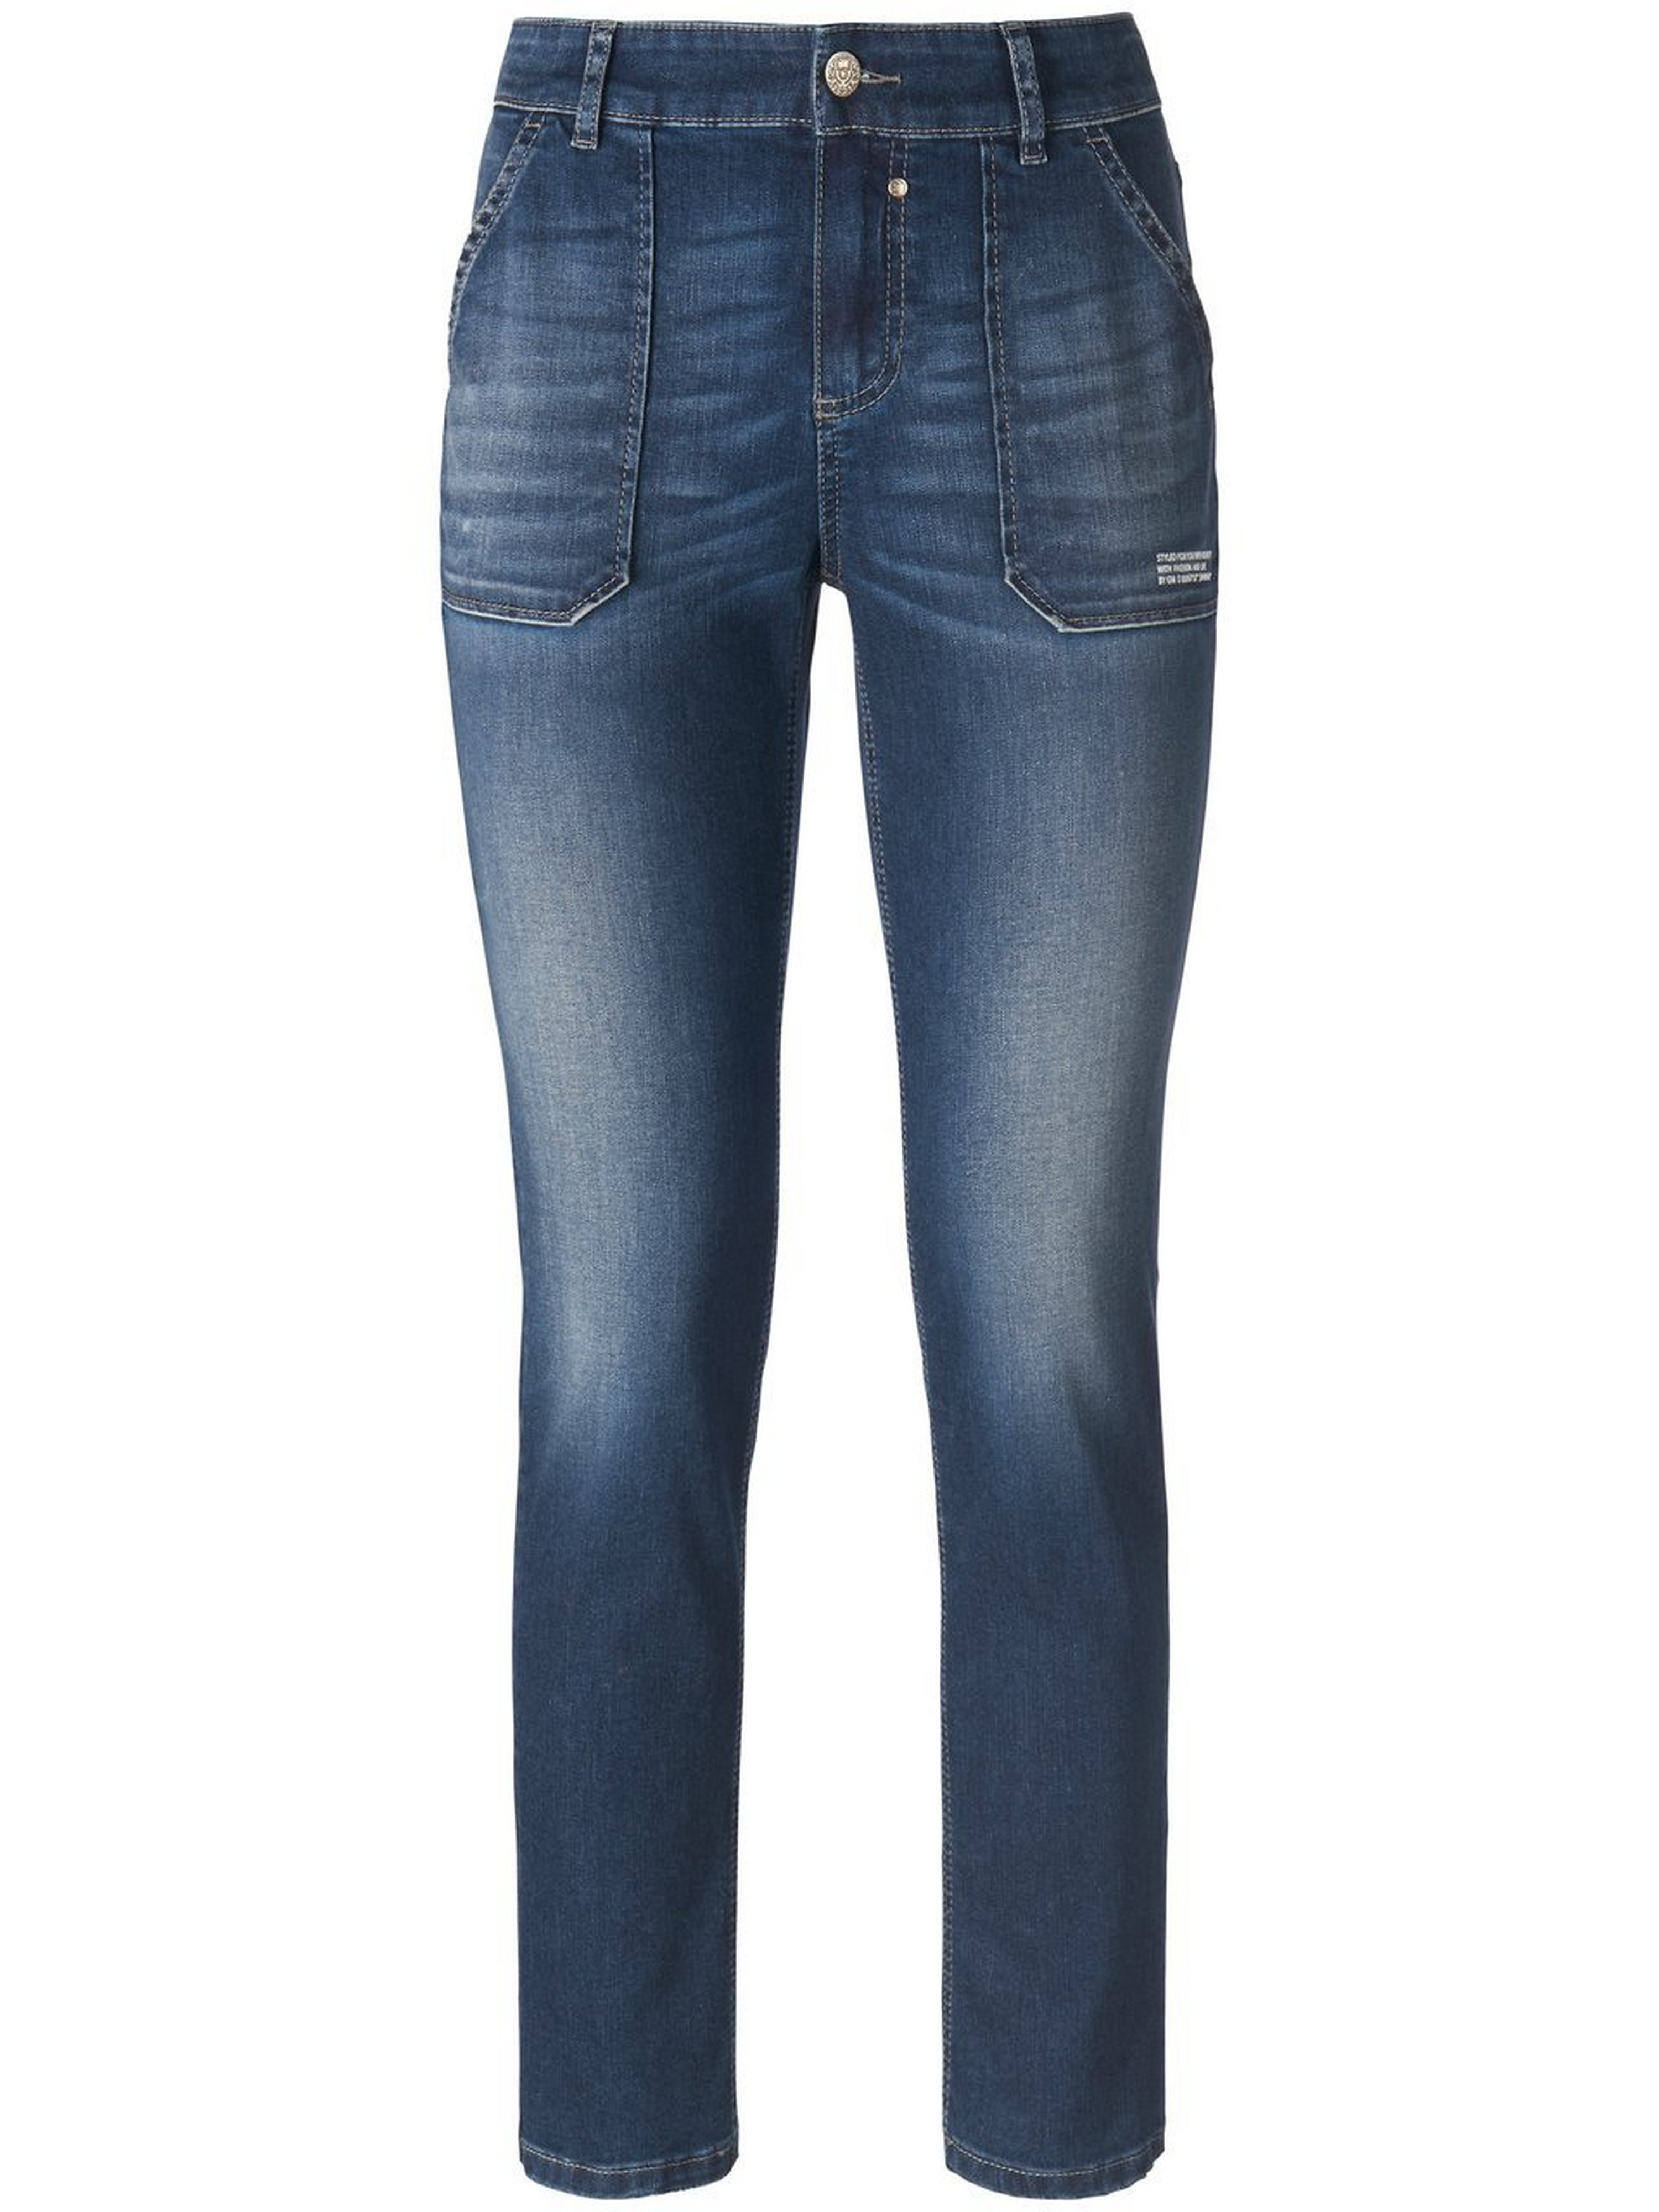 Enkellange skinny jeans model Gill Van Glücksmoment denim